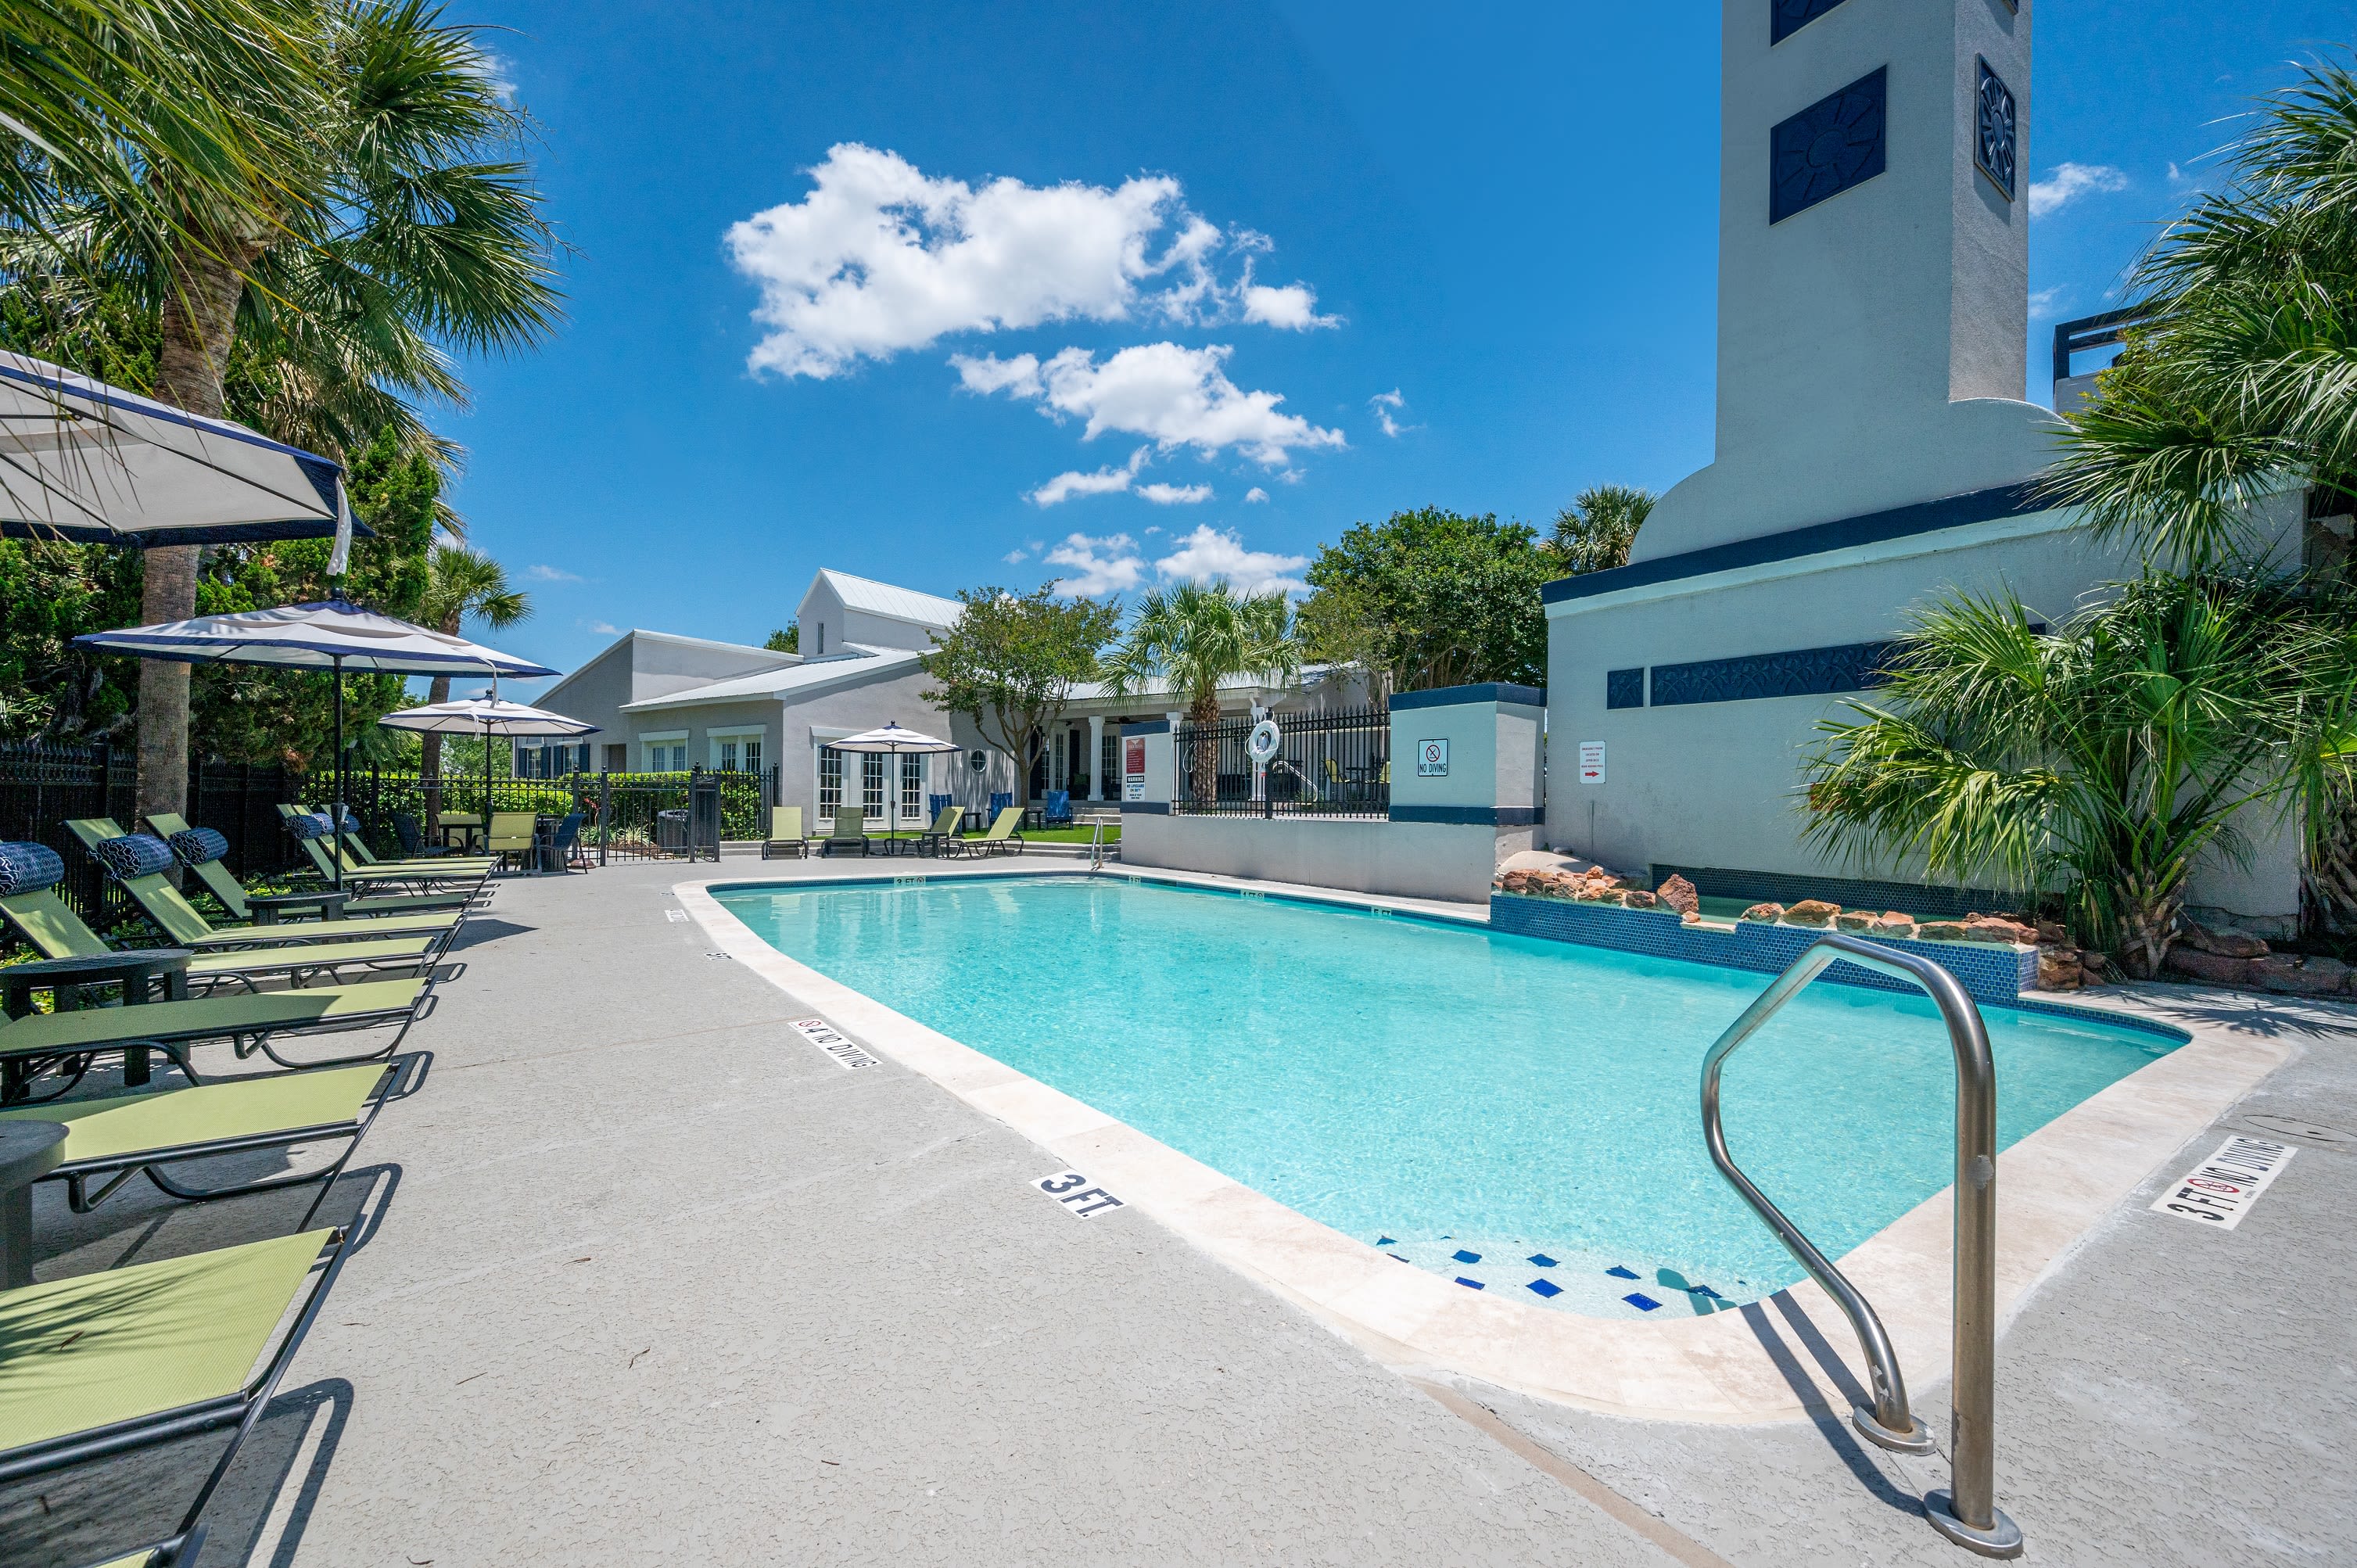 Resort style pool at Royal Palms in San Antonio, Texas